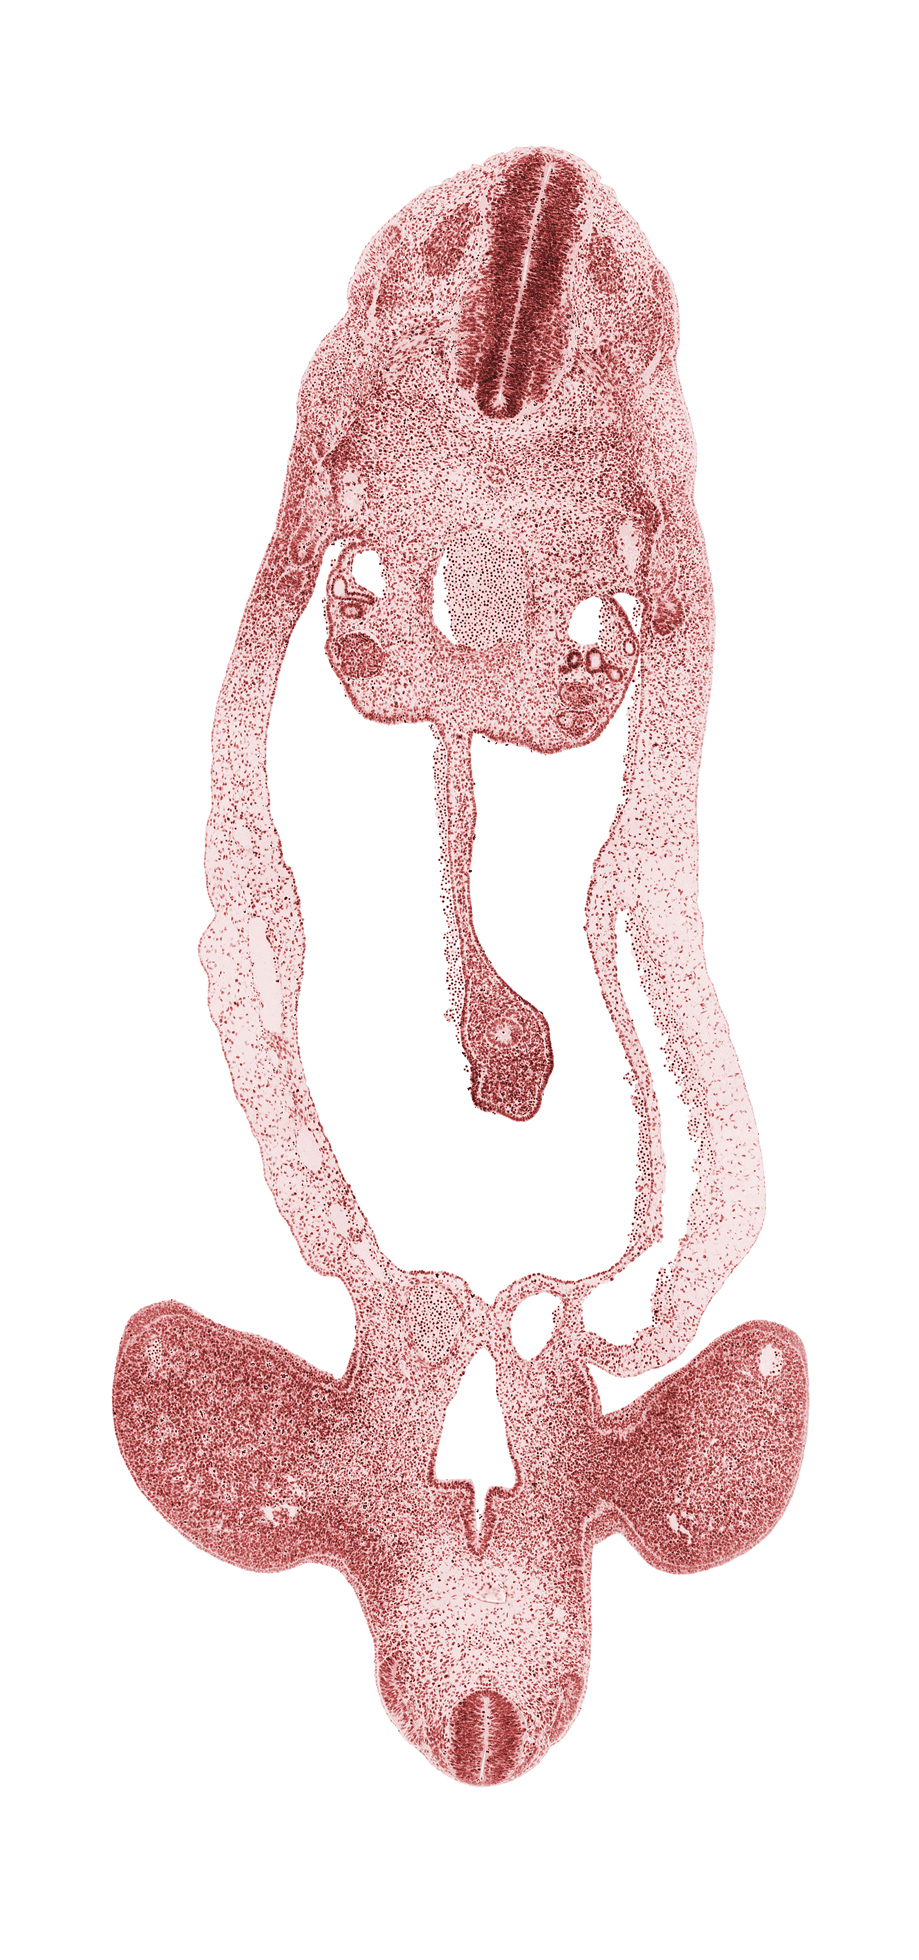 S-1 / S-2 interganglion region, abdominal wall, allantois, aorta, caudal part of T-3 spinal ganglion, cloaca, dorsal mesentery, gonadal ridge, hindgut, involuting right umbilical vein, junction of allantois and cloaca, junction of cloaca and hindgut, junction of cloaca and mesonephric duct, junction of lower limb and pelvic region, left umbilical artery, left umbilical vein, lower limb, marginal vein, mesonephric duct, midgut loop, neural canal, neural tube, notochord, peritoneal cavity, sclerotome